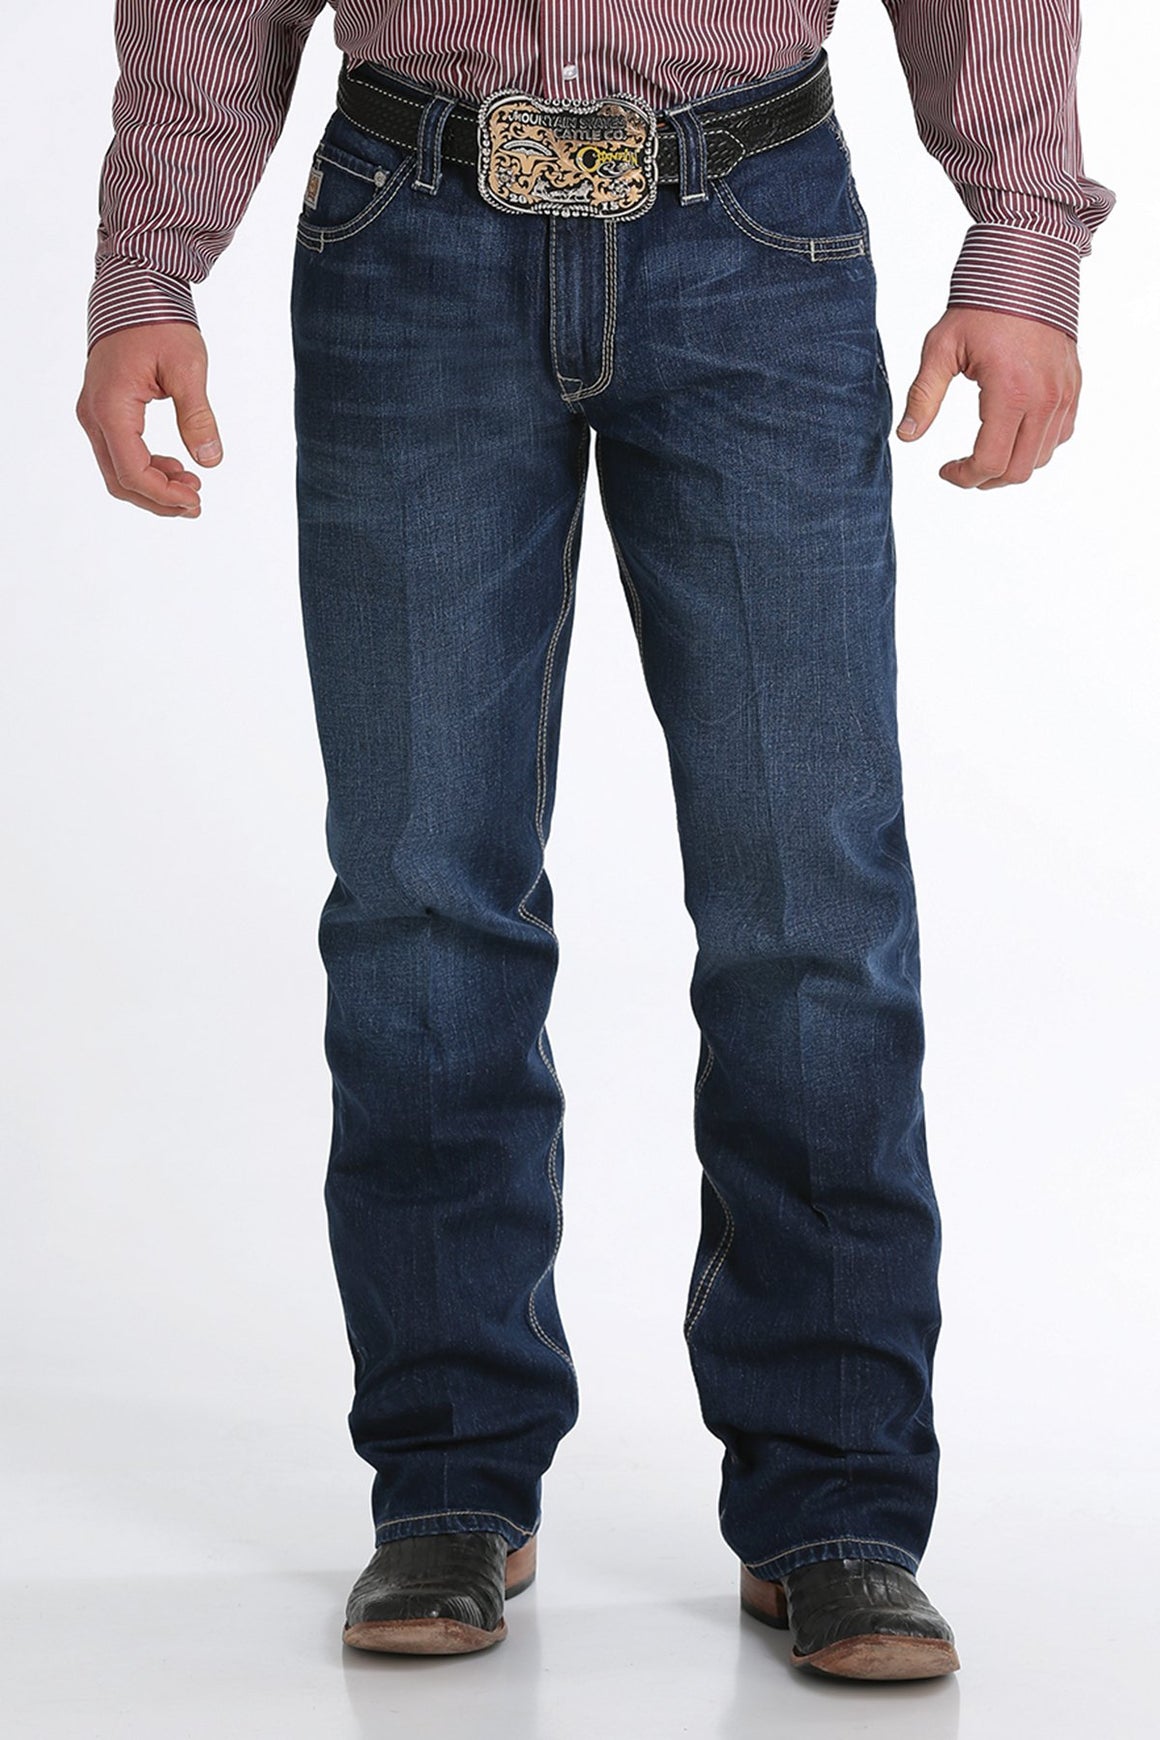 cinch up jeans mens